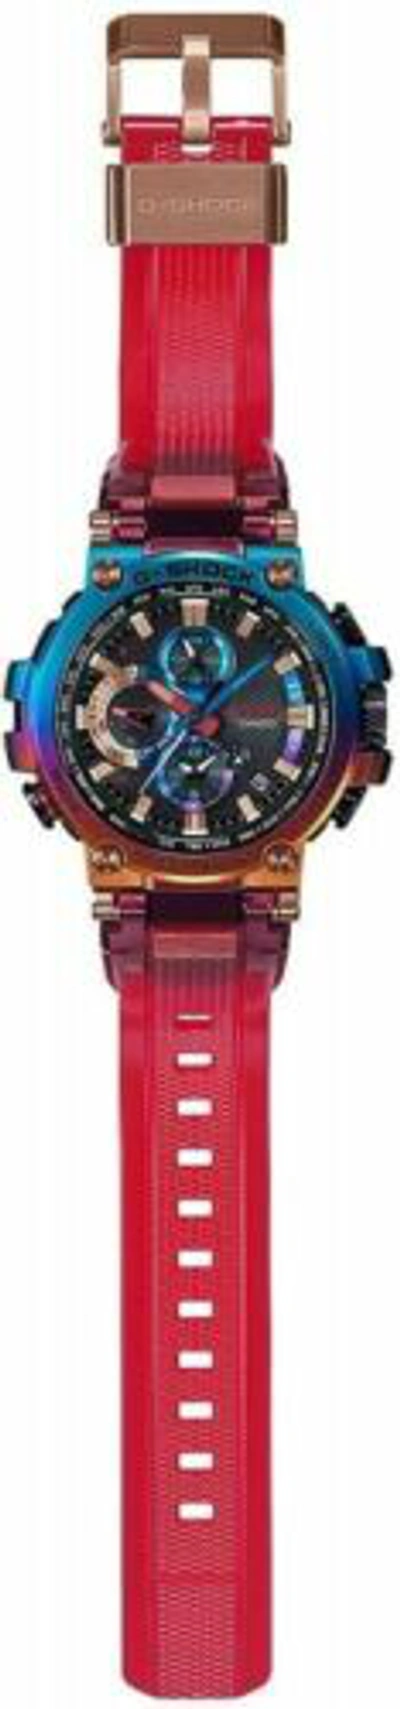 Pre-owned Casio Watch G-shock Mtg-b1000vl-4ajr Men's Red